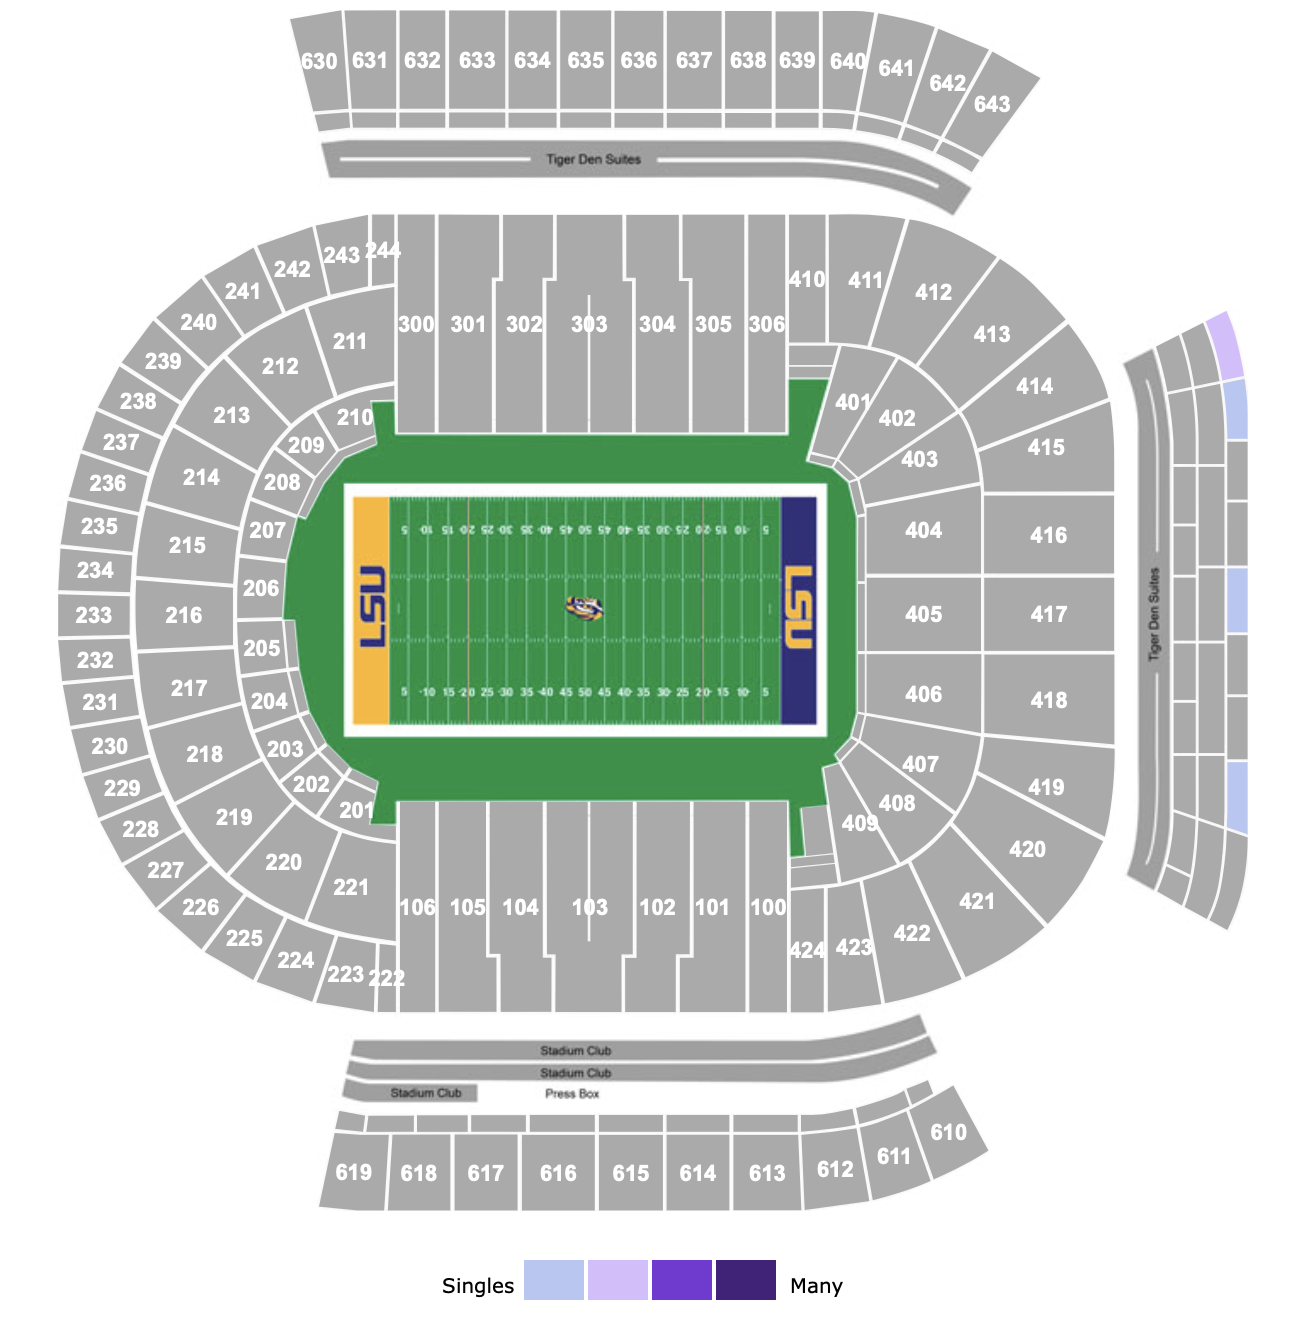 Death Valley Stadium Seating Chart